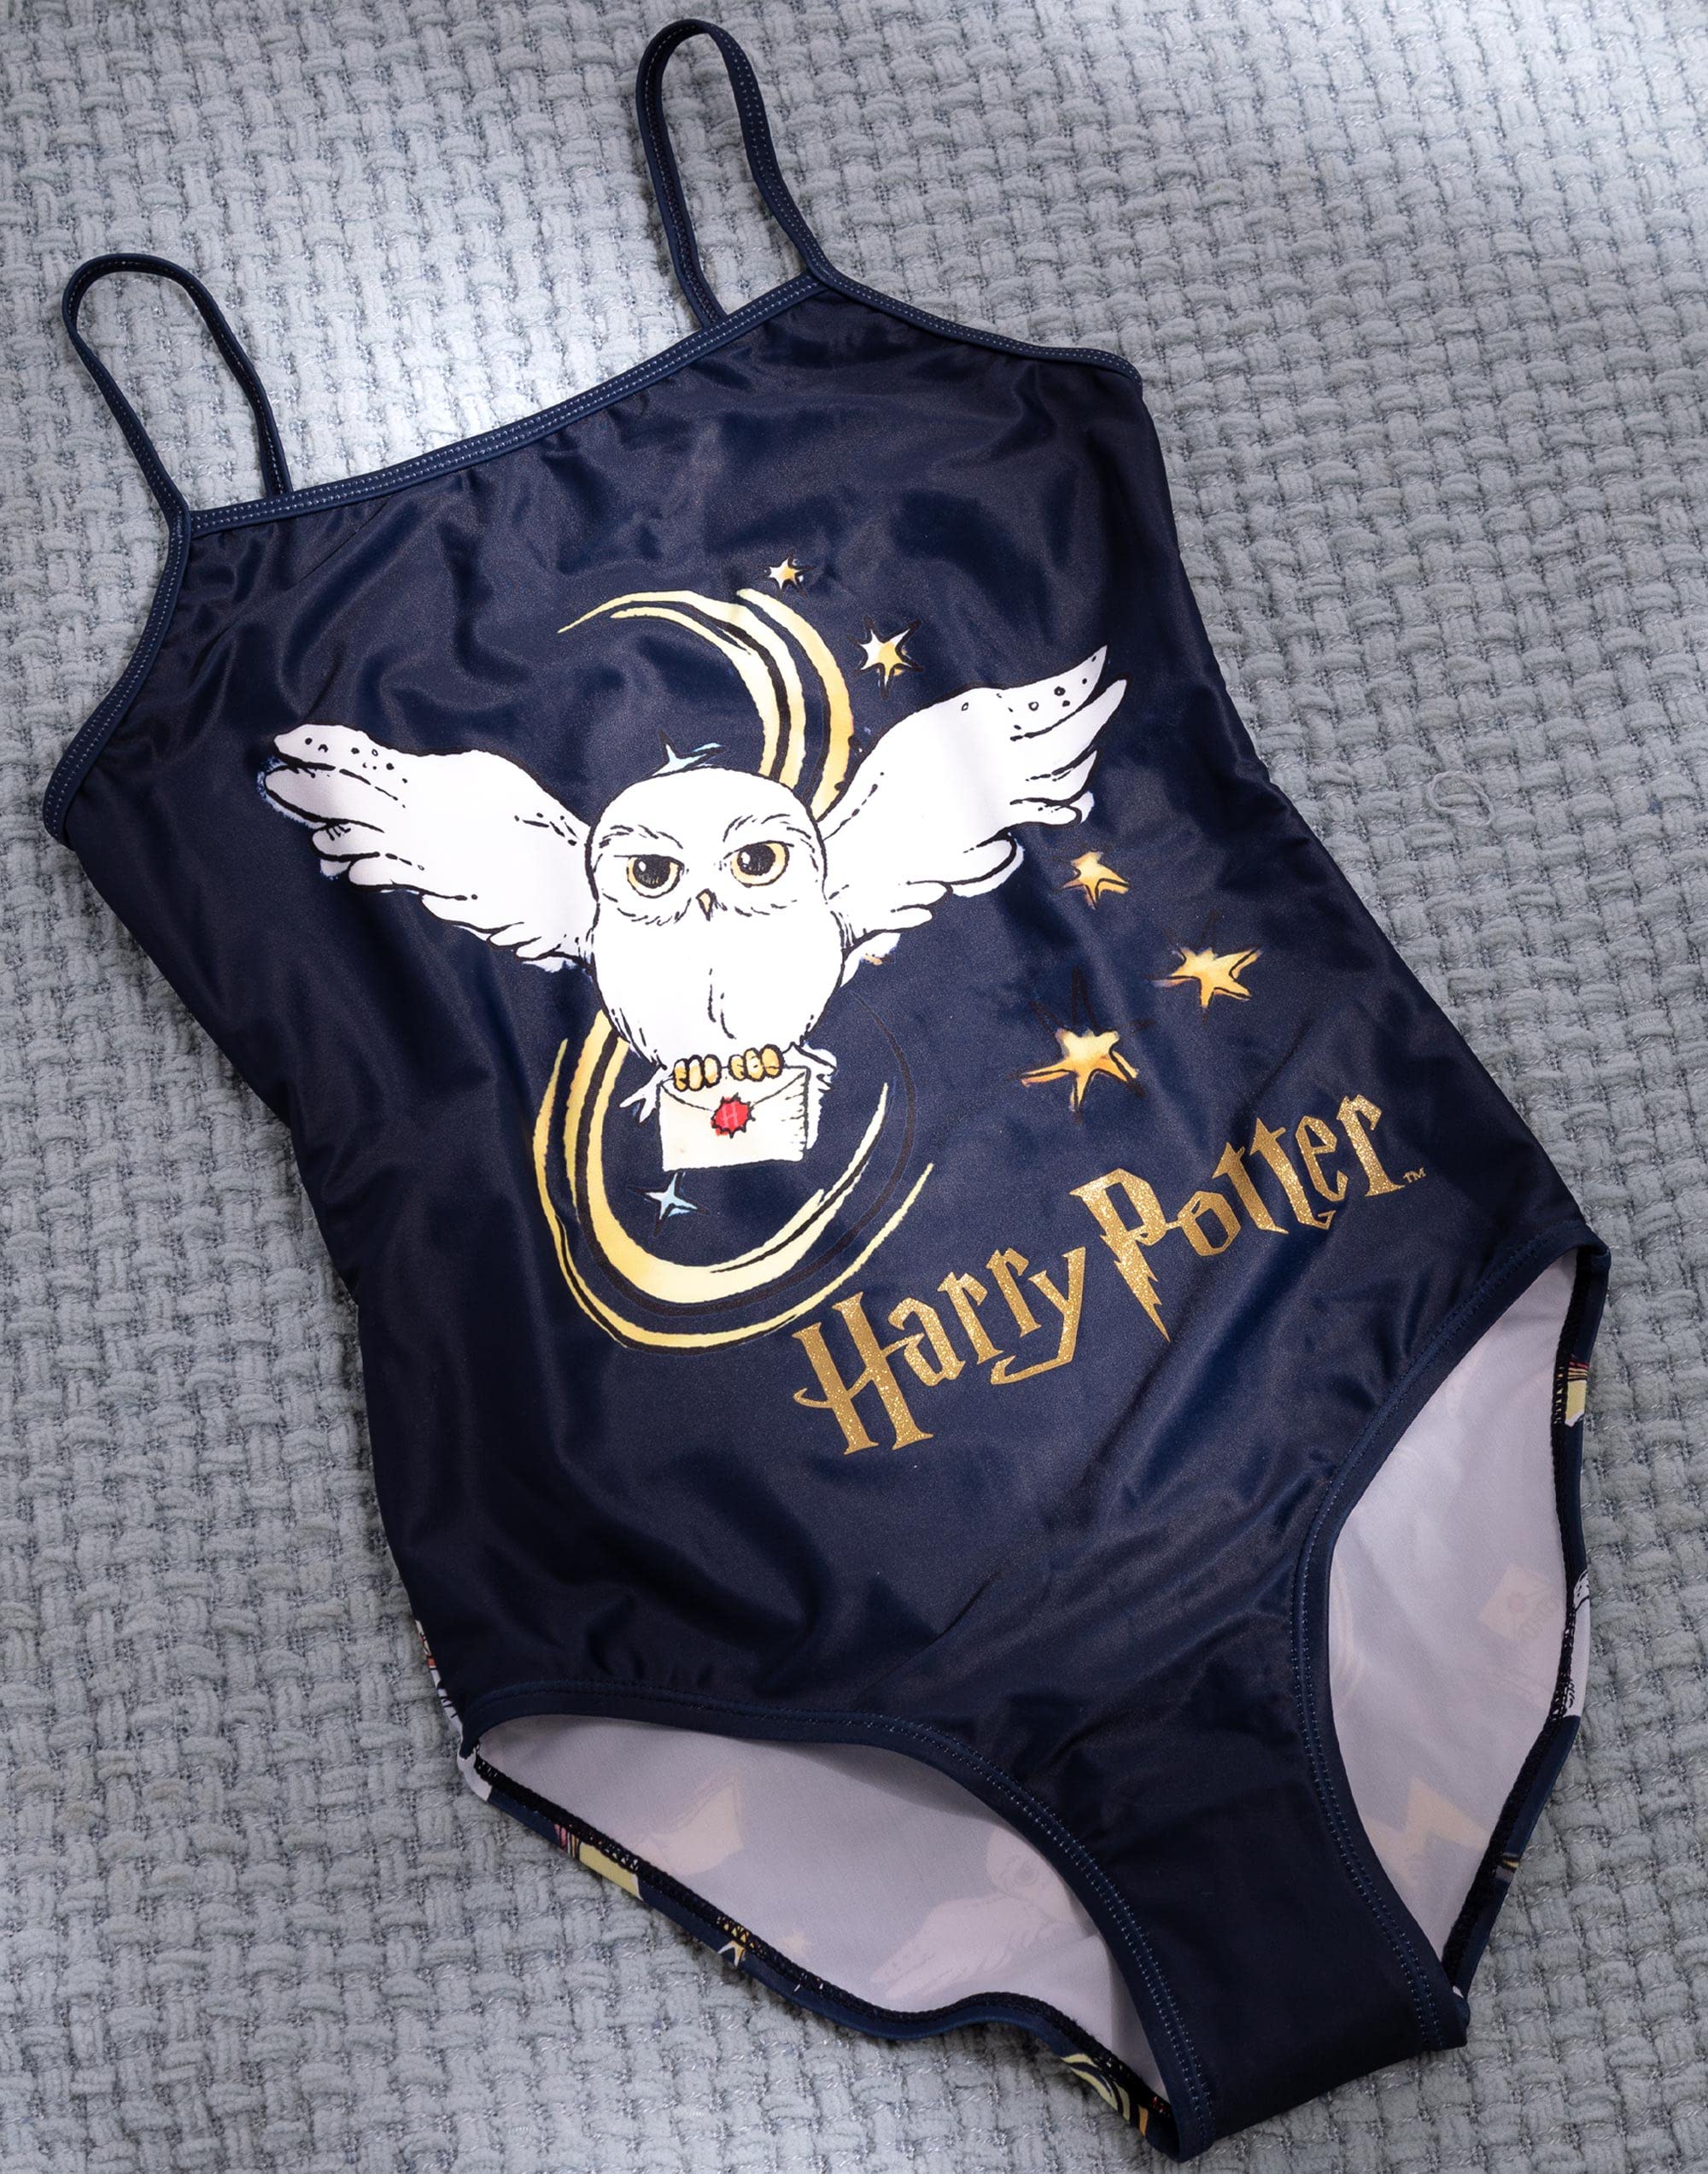 Harry Potter Swimsuits Girls Hogwarts Burgundy OR Navy Hedwig Swimwear